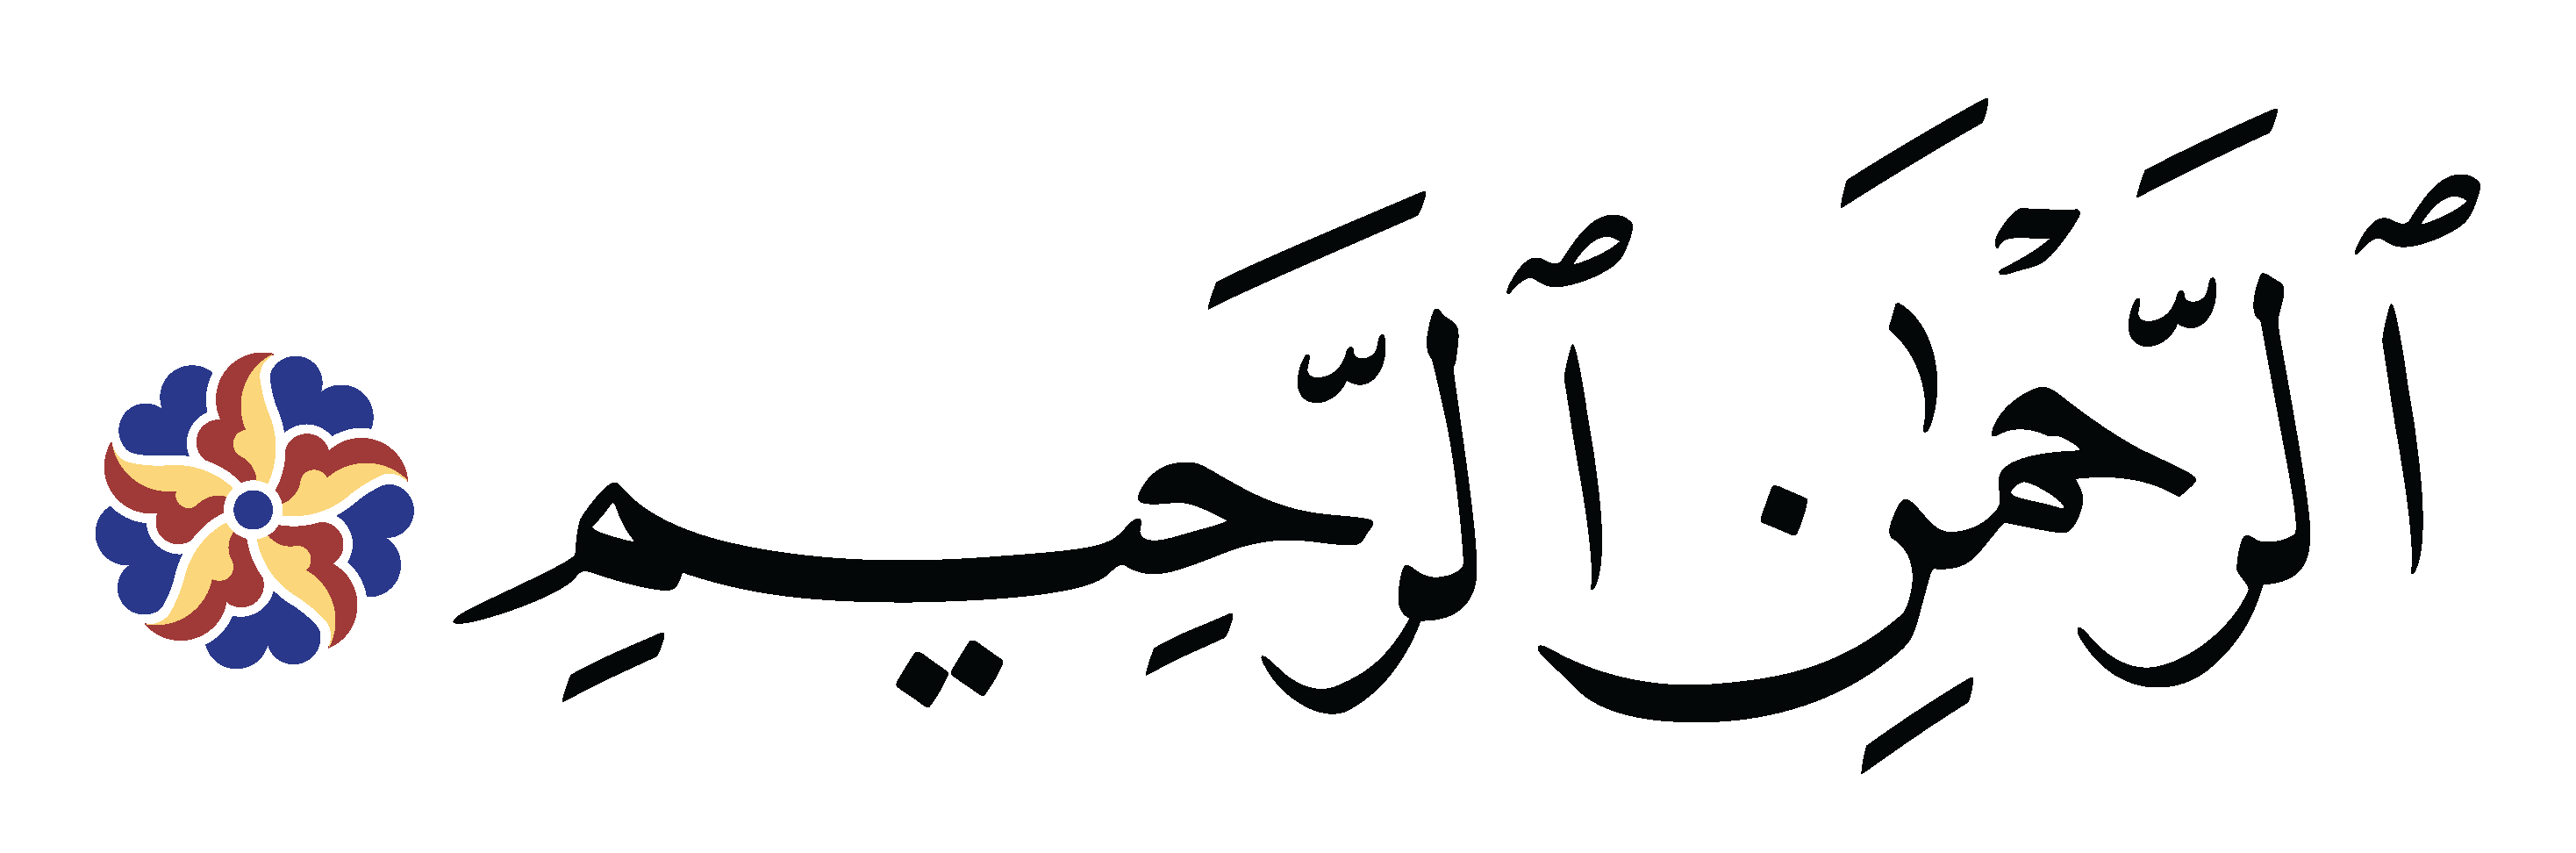 Assalamualaikum bahasa arab